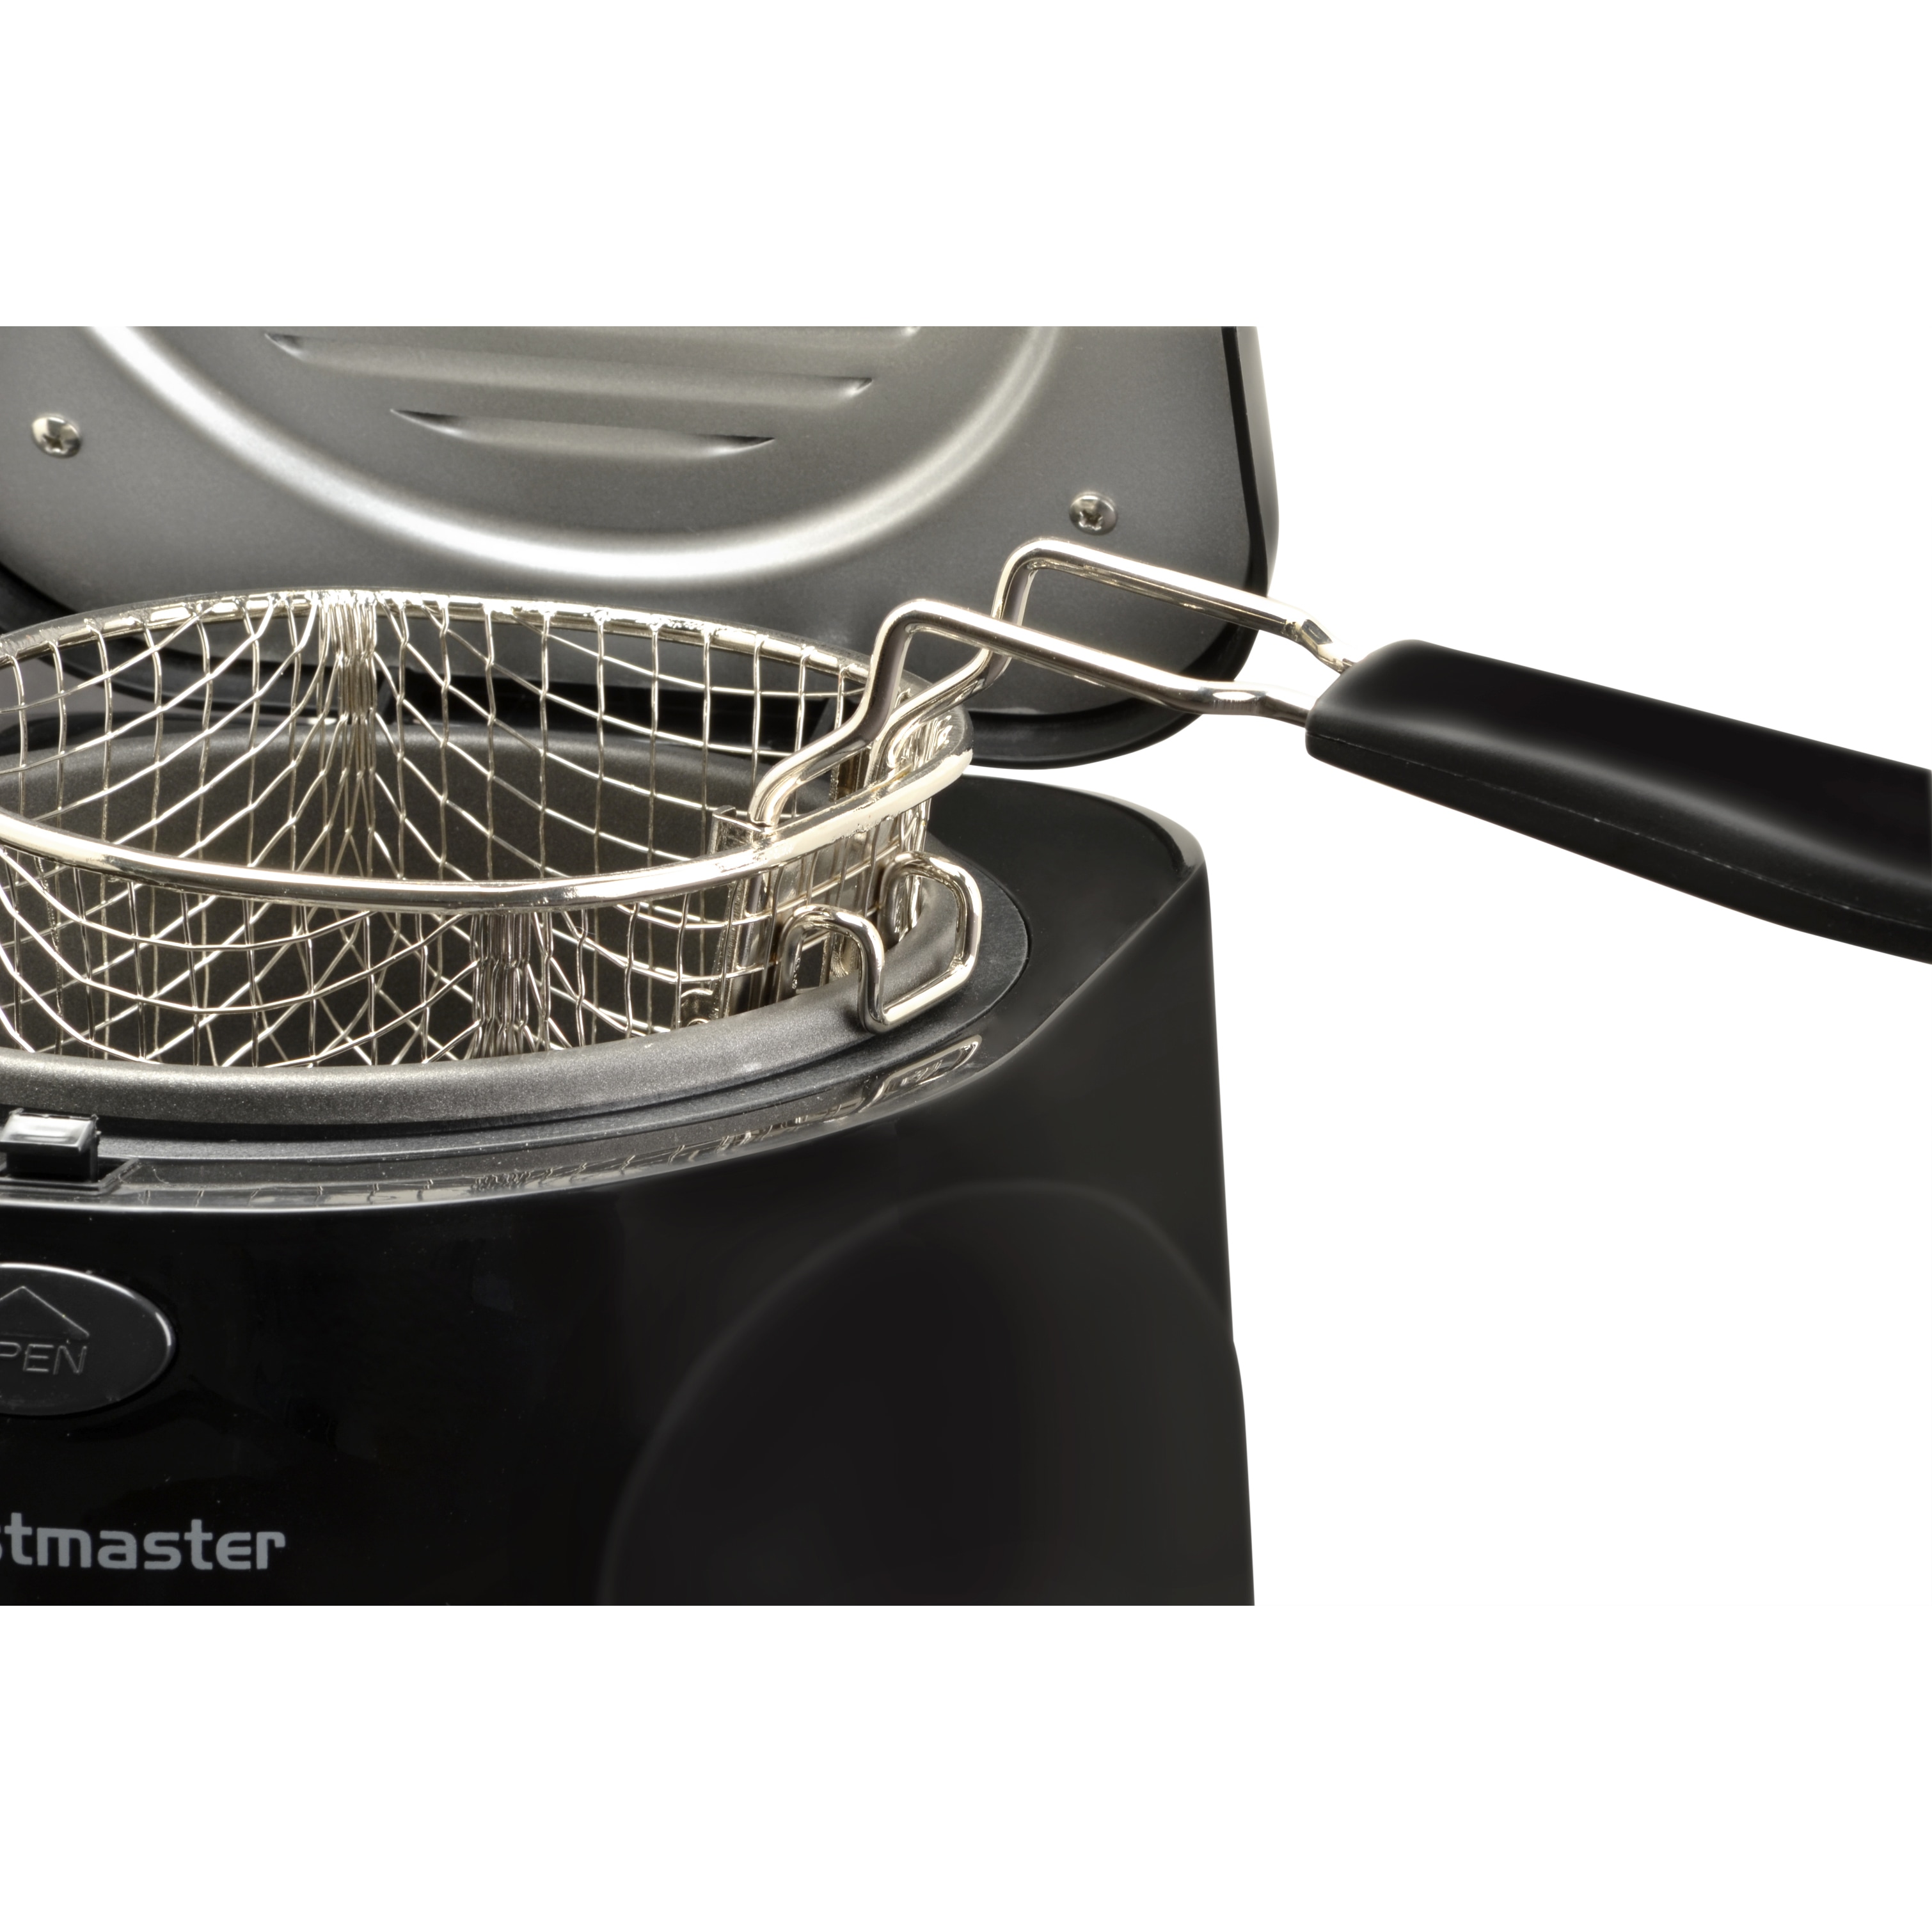 Toastmaster 1.5-Liter Deep Fryer